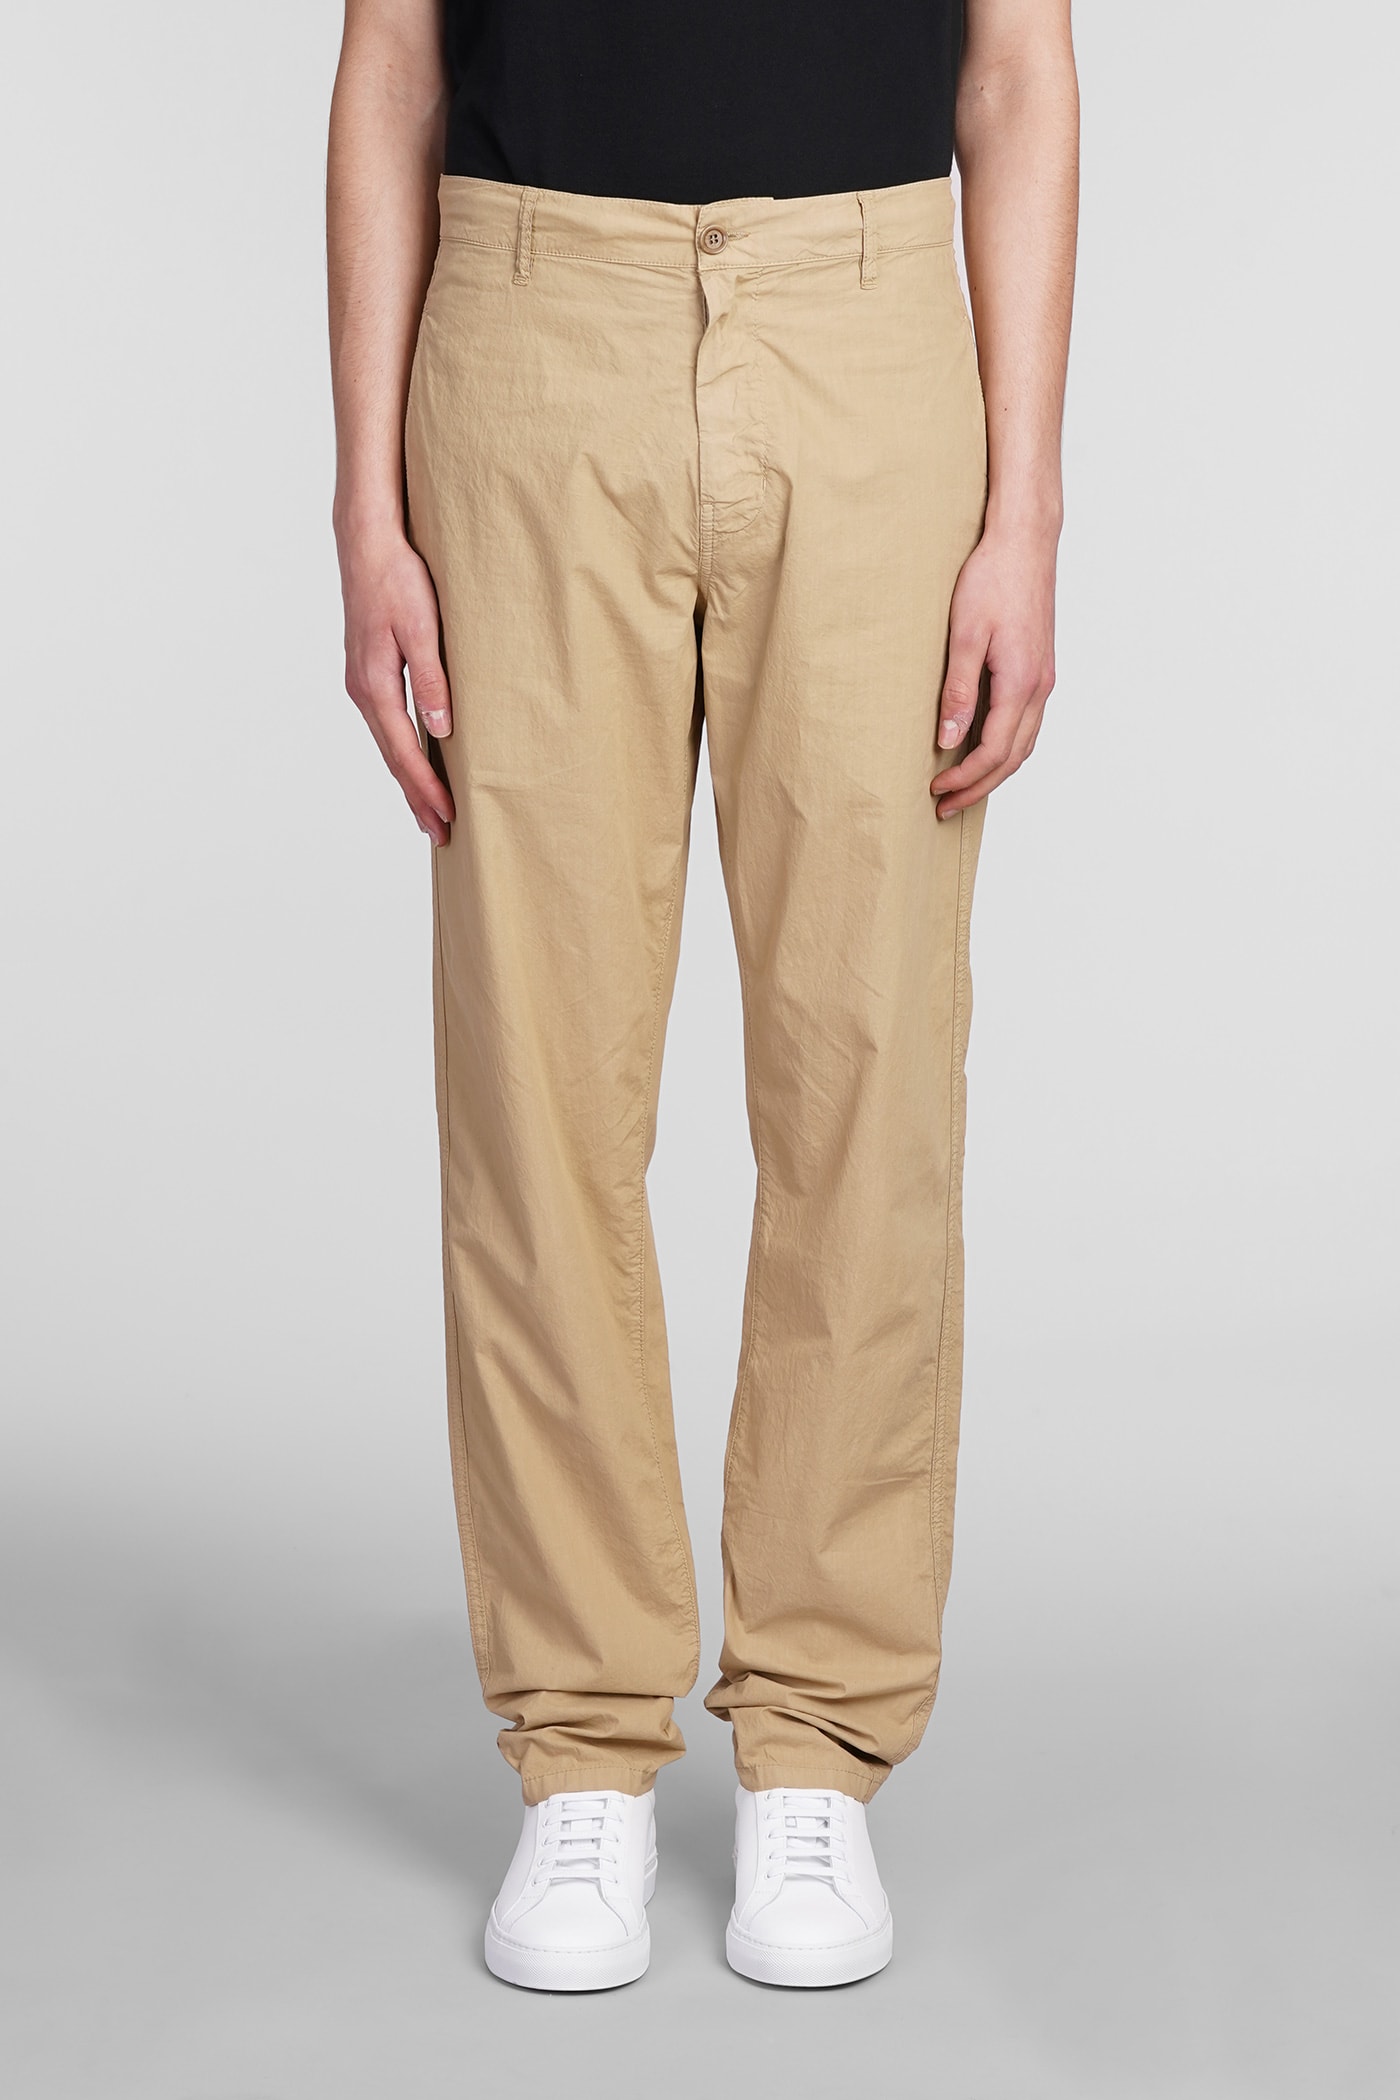 Pantalone Funzionale Pants In Beige Cotton